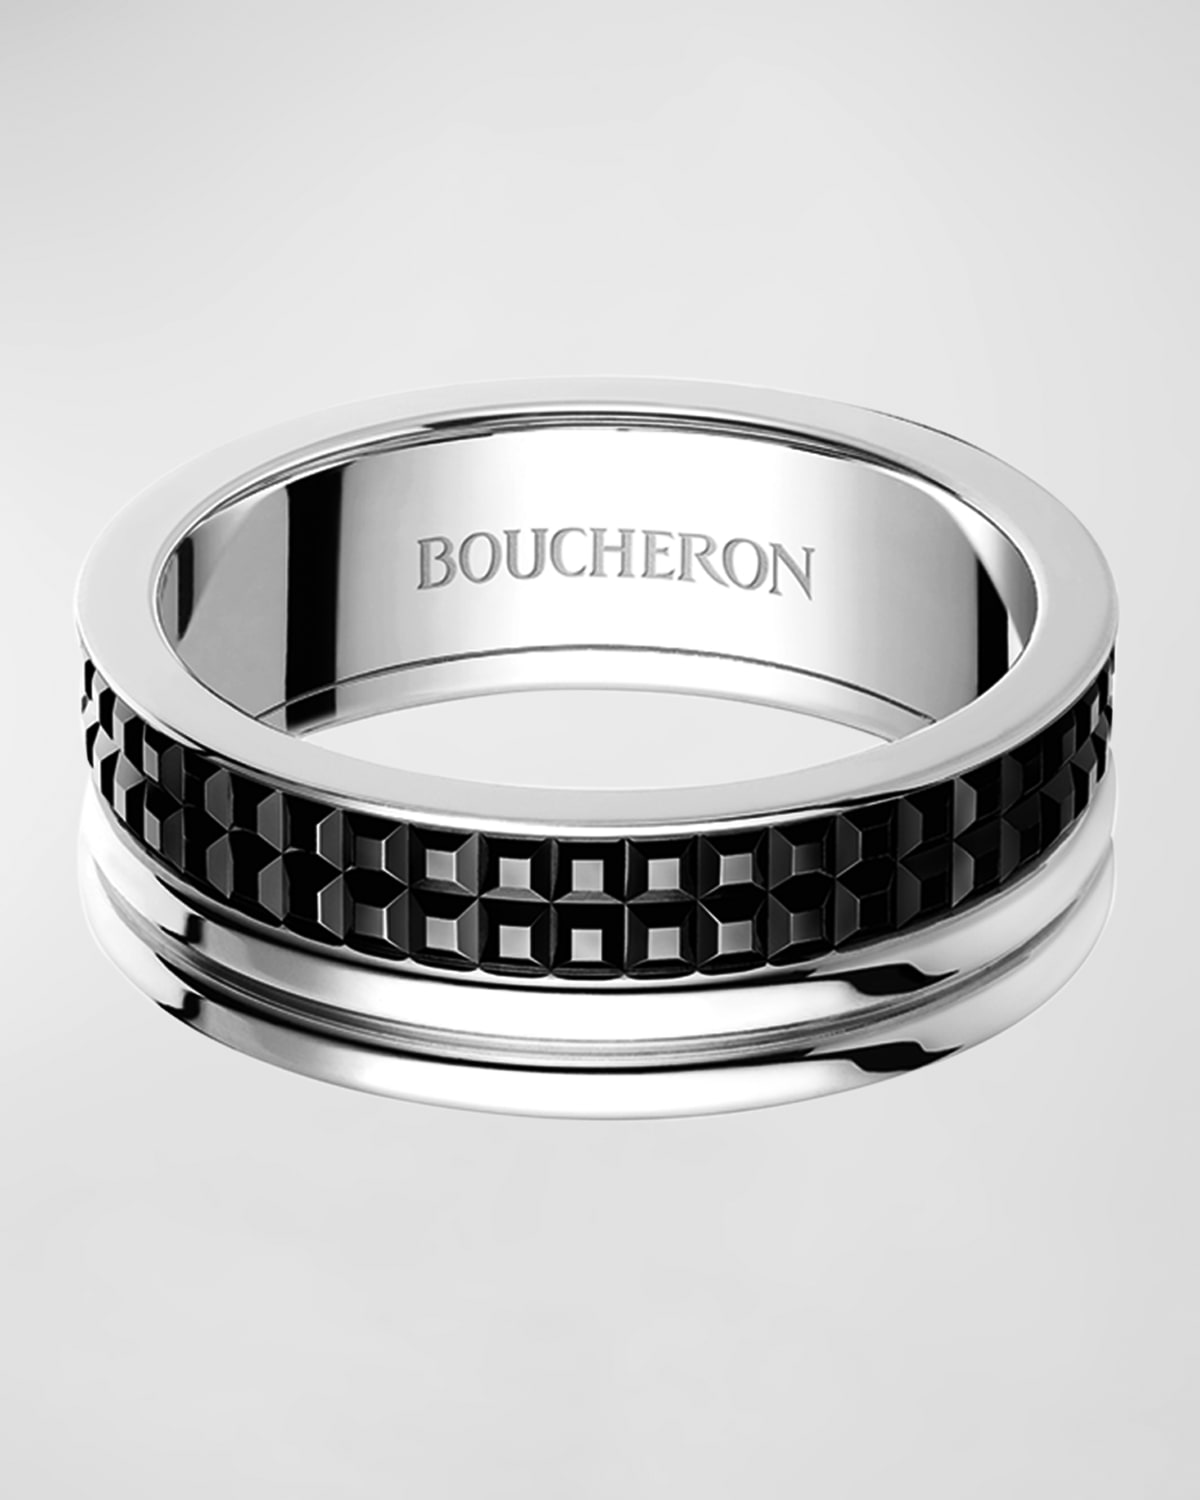 BOUCHERON 18K WHITE GOLD QUATRE BLACK EDITION LARGE RING, EU 52 / US 6